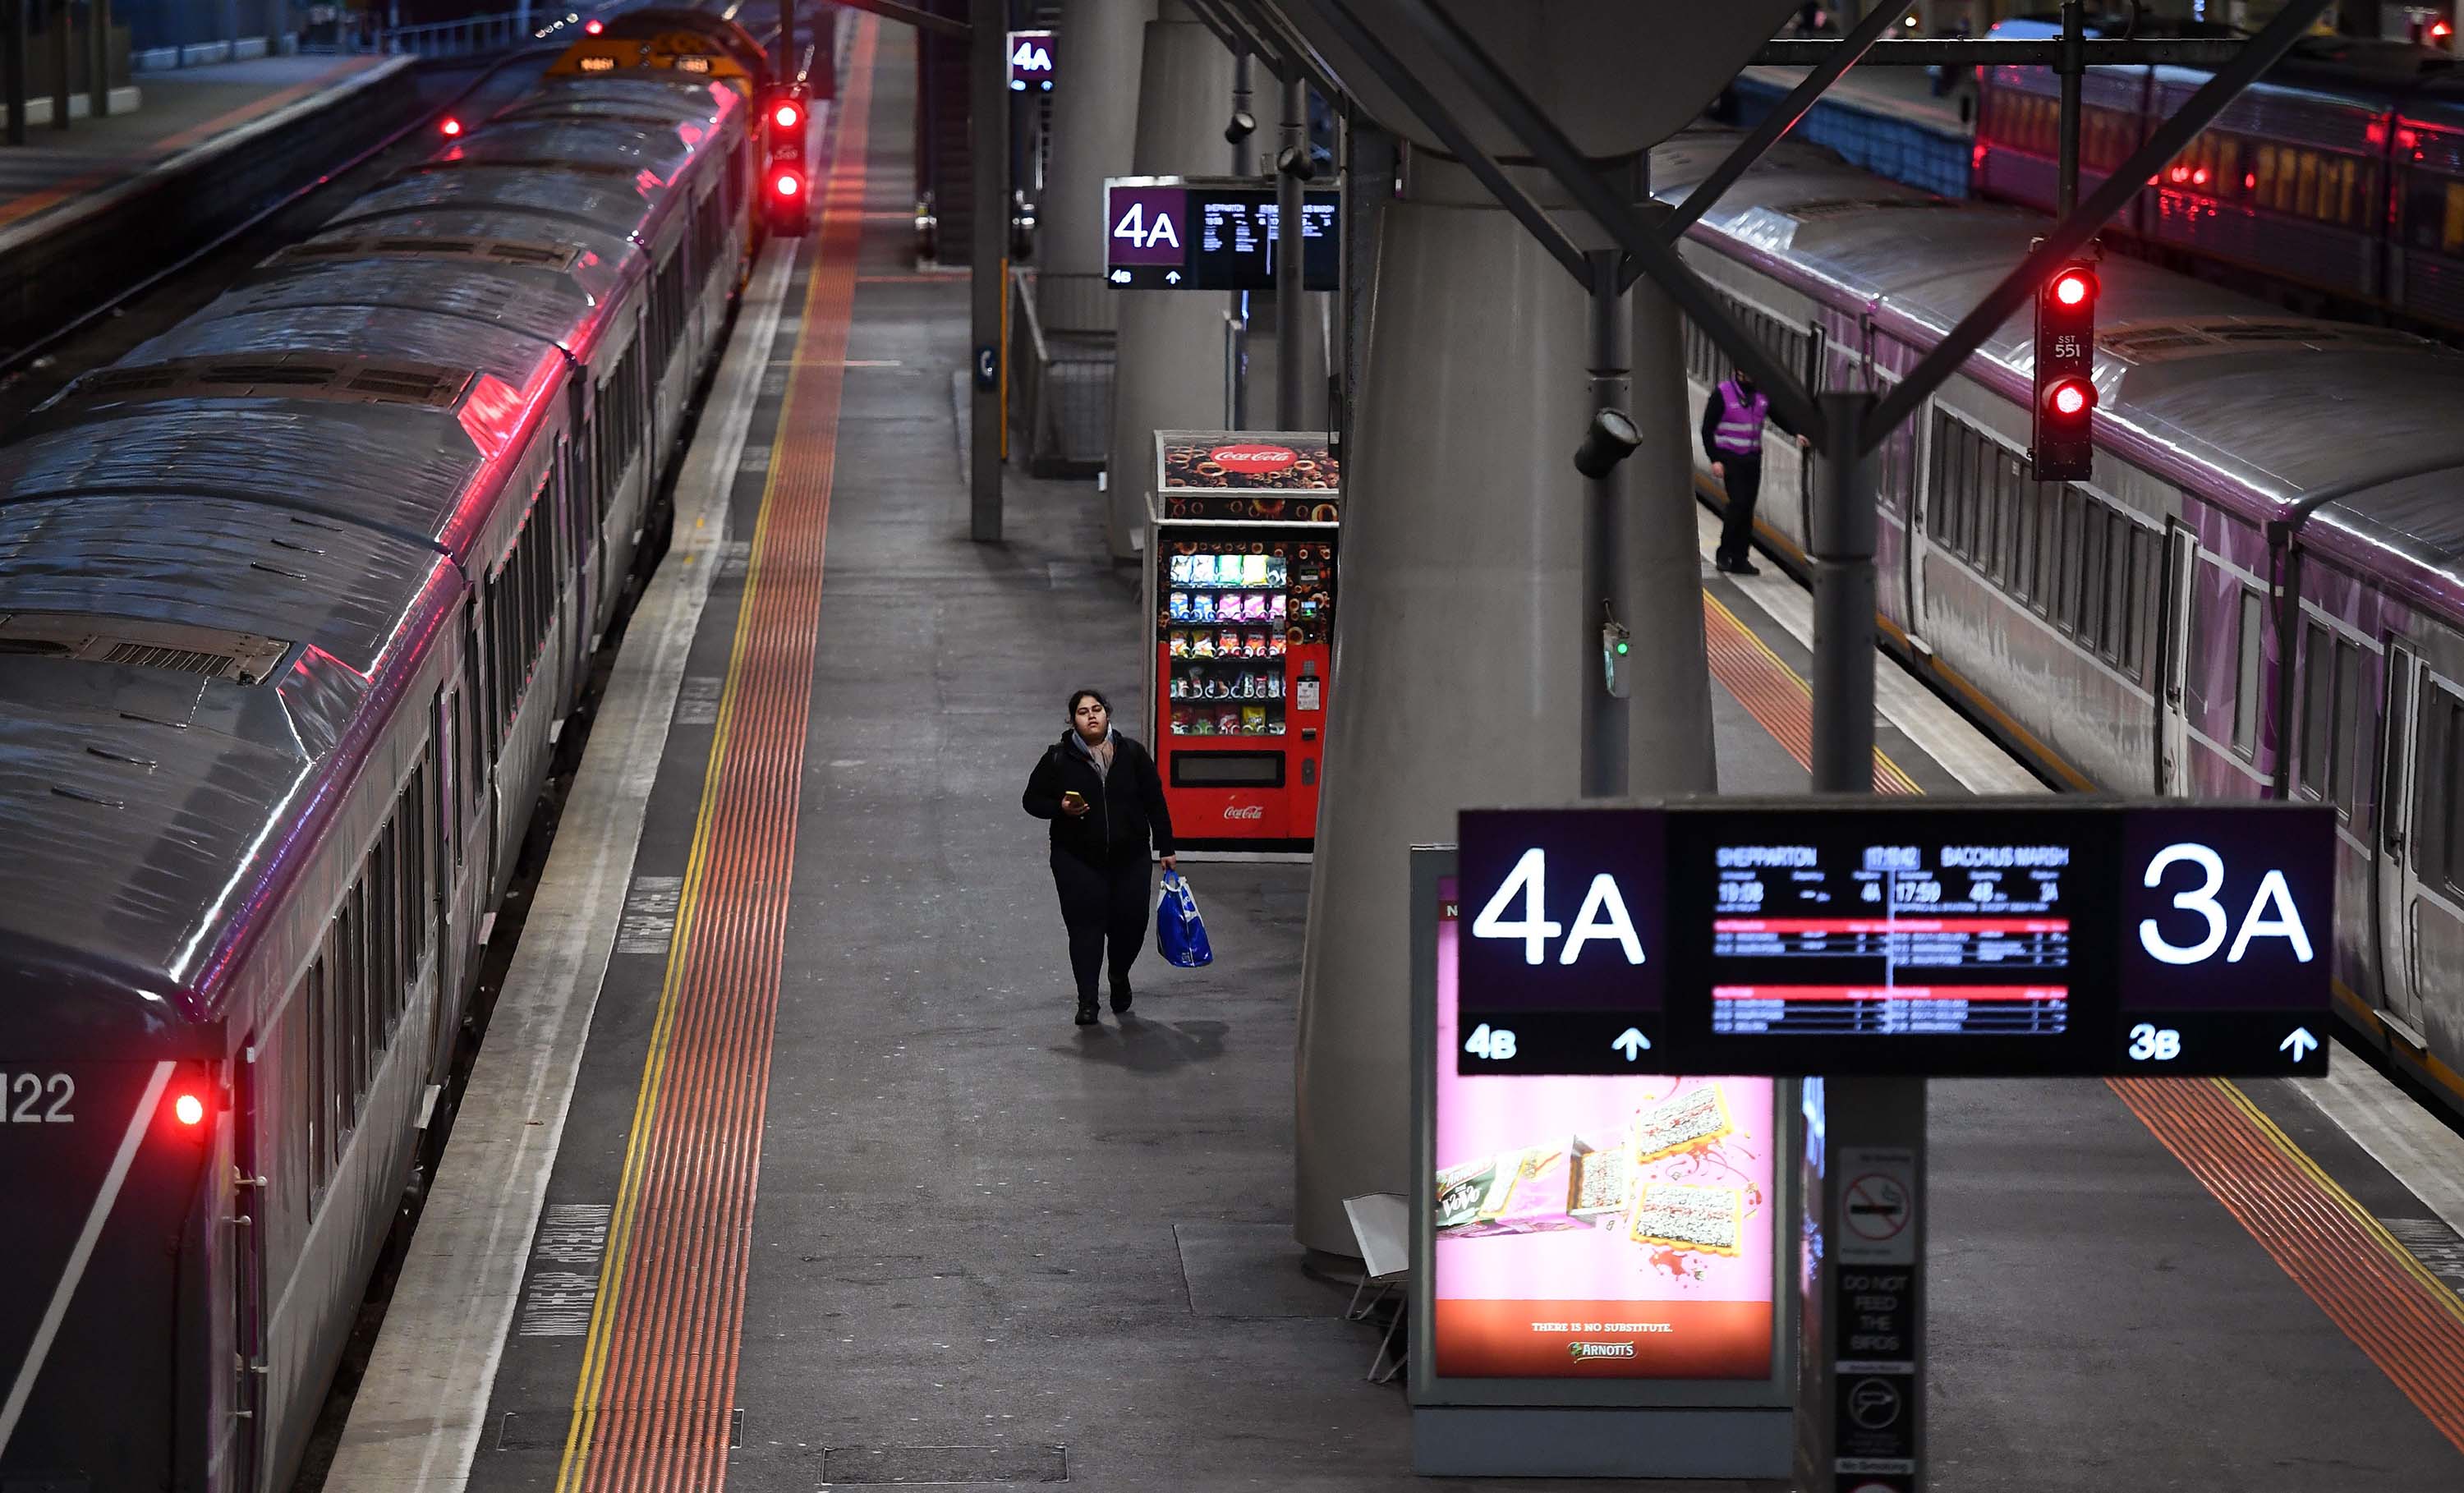 Seorang penumpang berjalan di sepanjang peron selama jam sibuk di stasiun Southern Cross Melbourne pada 30 Juni. Negara bagian Victoria di Australia telah memperkenalkan kembali tindakan penguncian di 10 pinggiran kota Melbourne menyusul lonjakan baru-baru ini dalam kasus coronavirus.